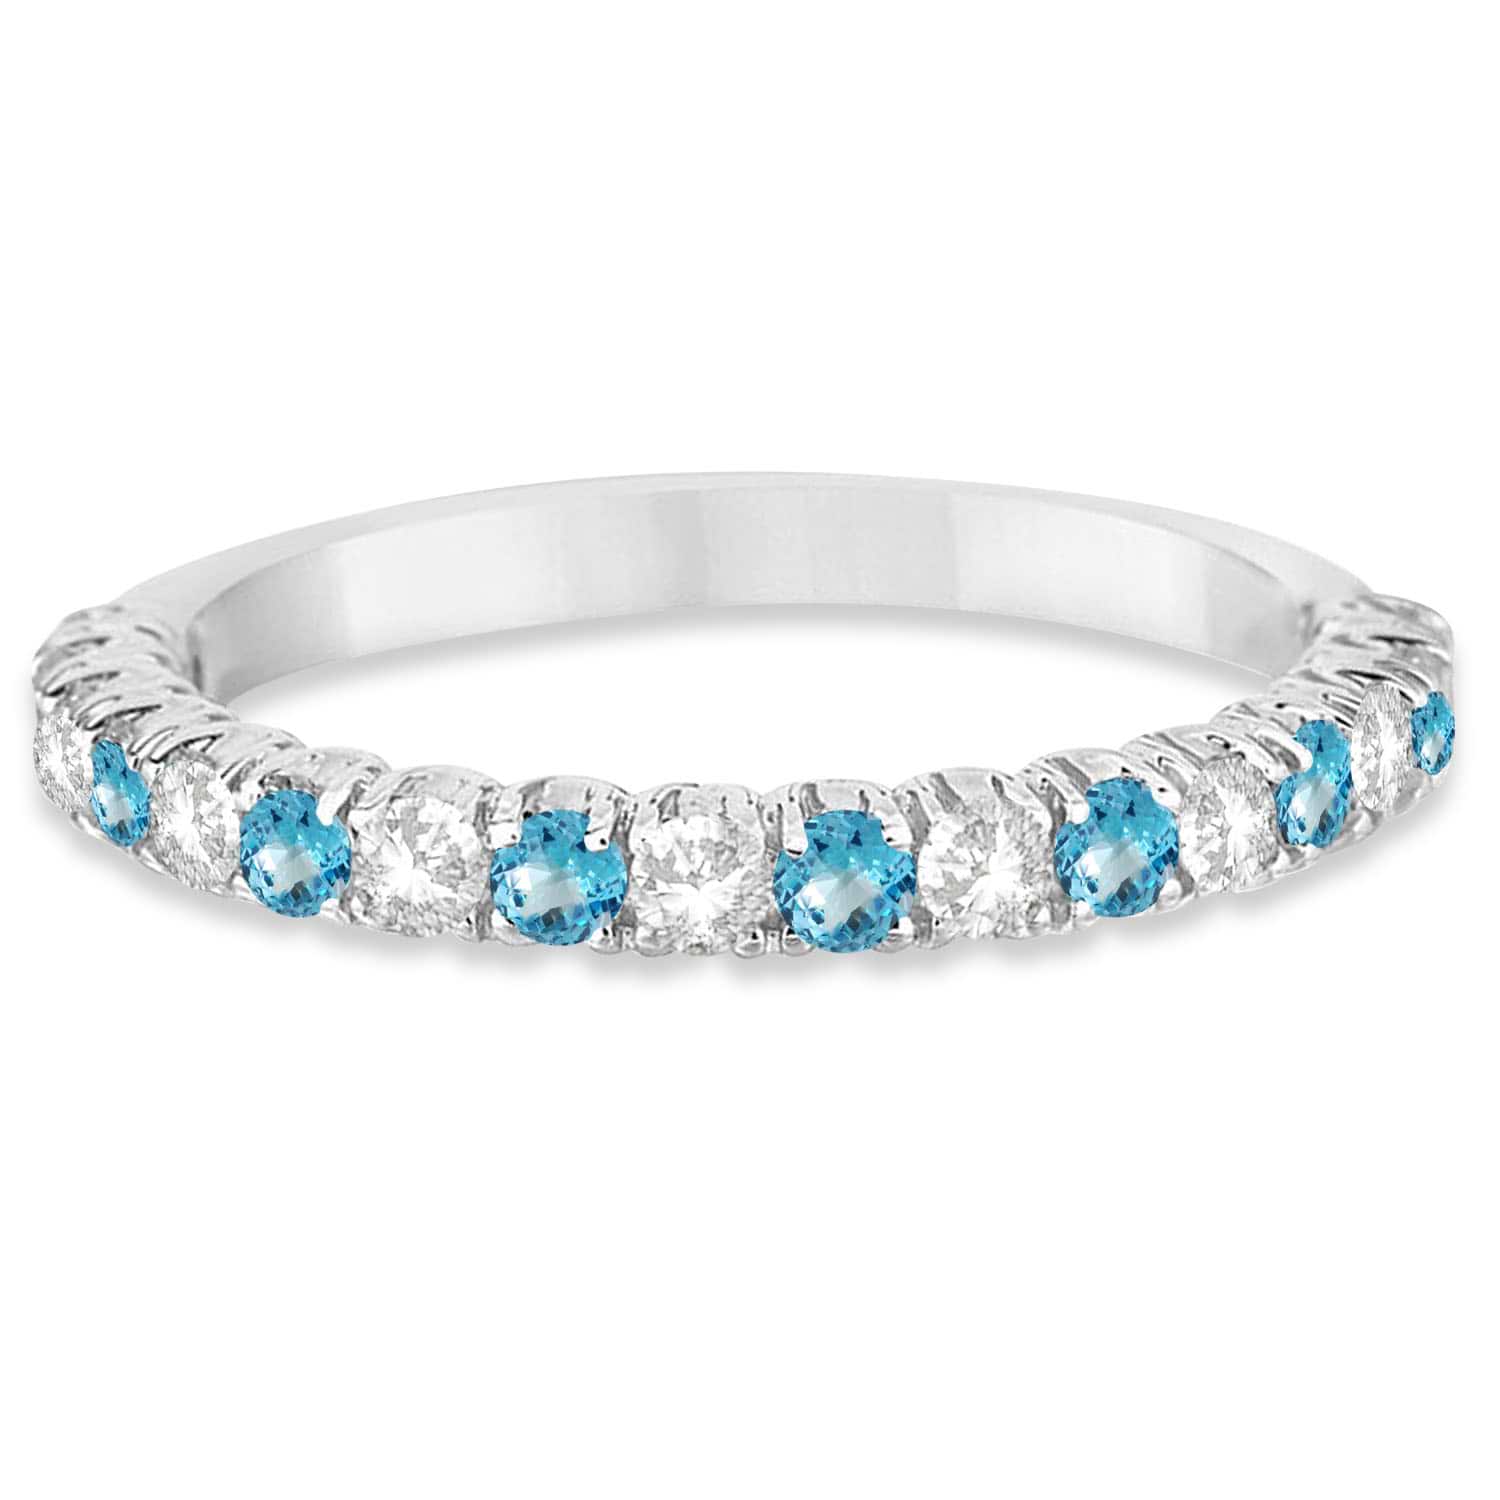 Blue Topaz & Diamond Wedding Band Anniversary Ring in 14k White Gold (0.75ct)